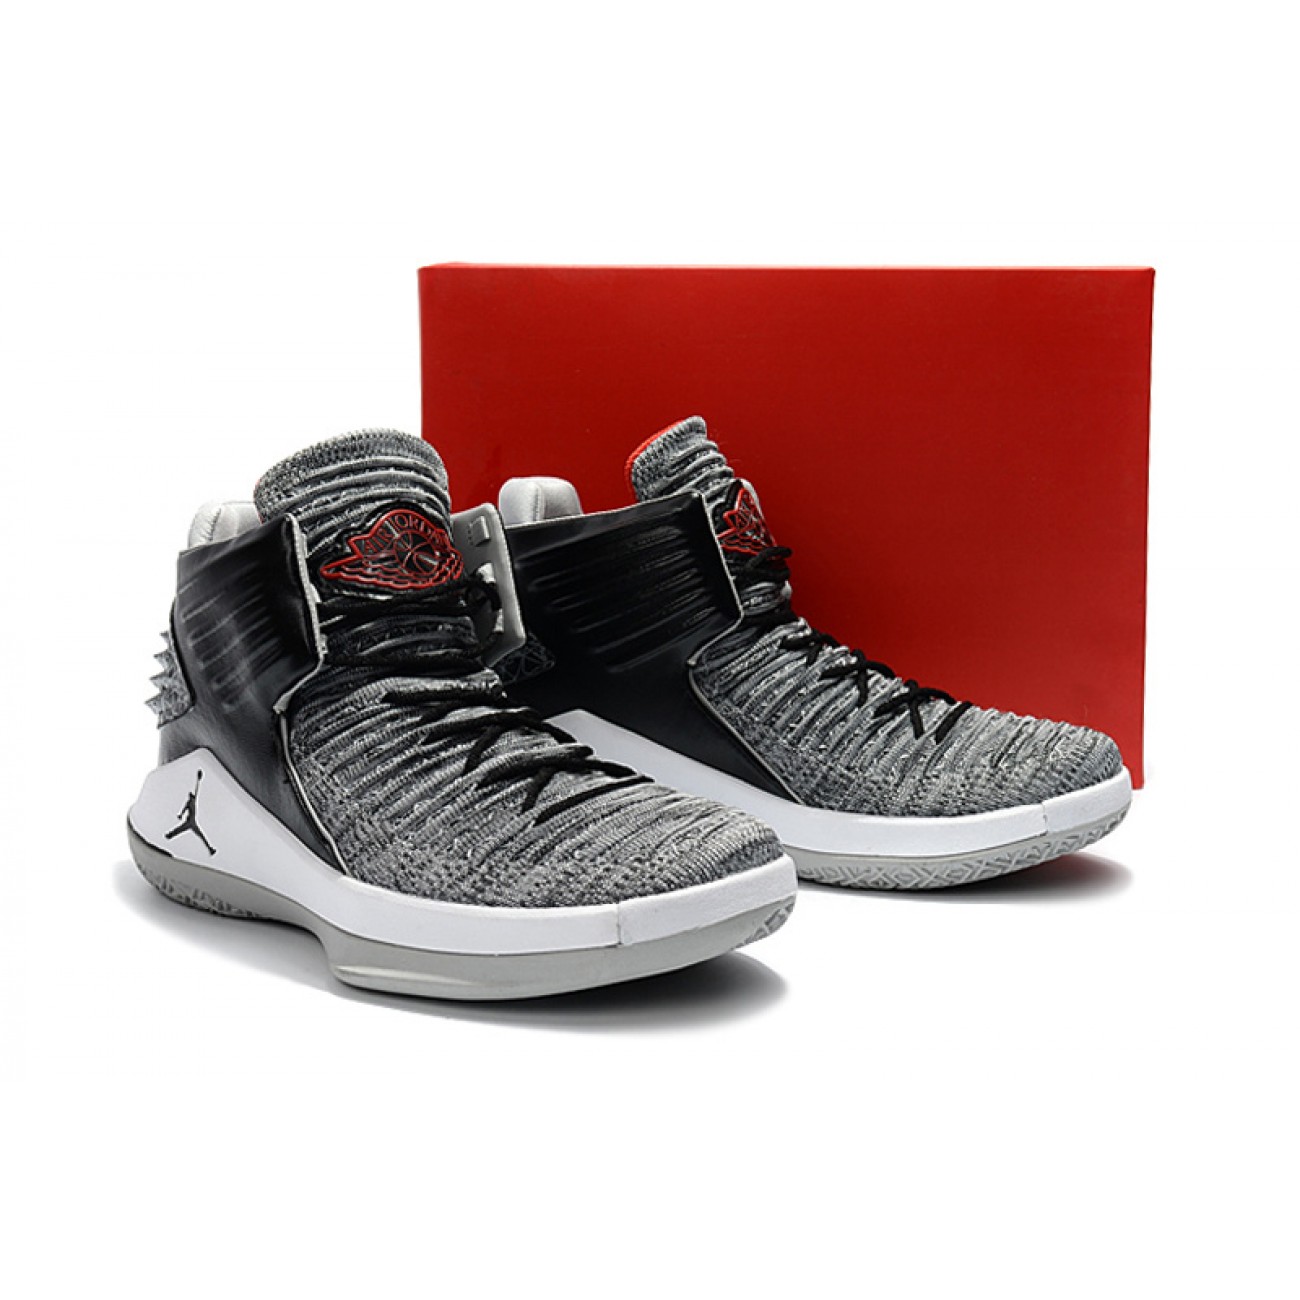 Air Jordan 32 XXXII "MVP" / Grey